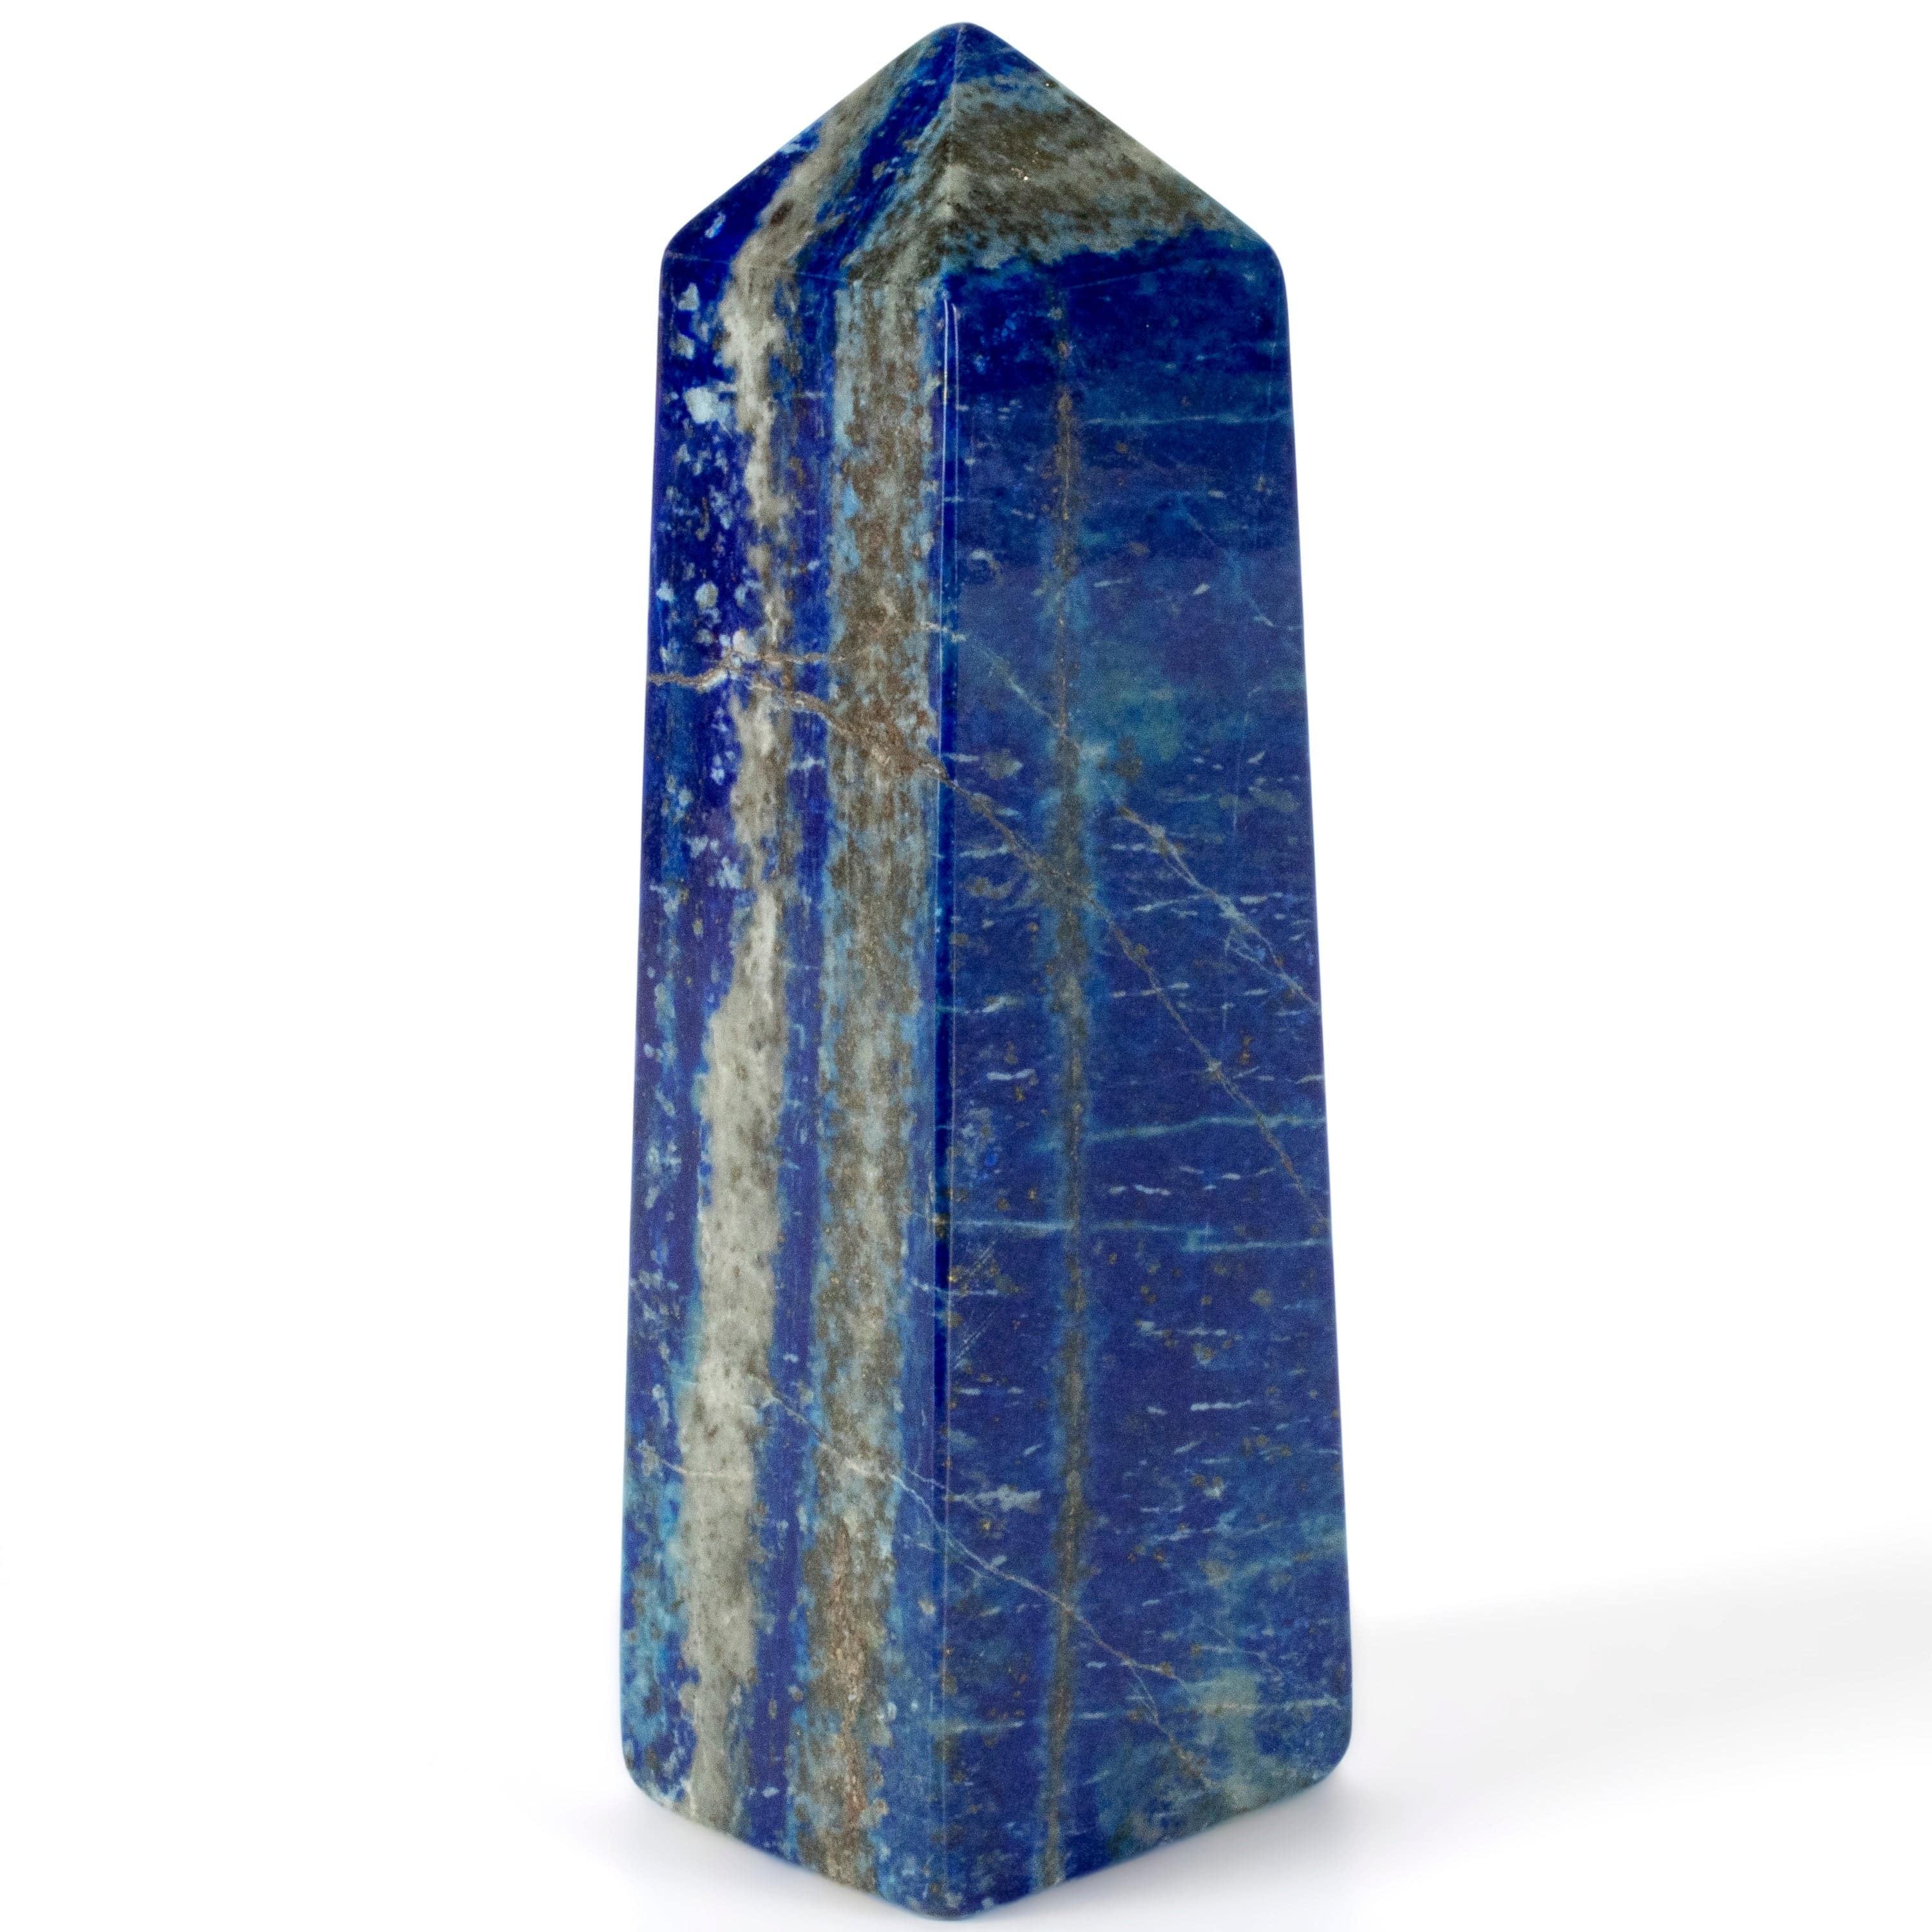 Kalifano Lapis Lapis Lazuli Polished Obelisk from Afghanistan - 5" / 346 grams LPOB700.001